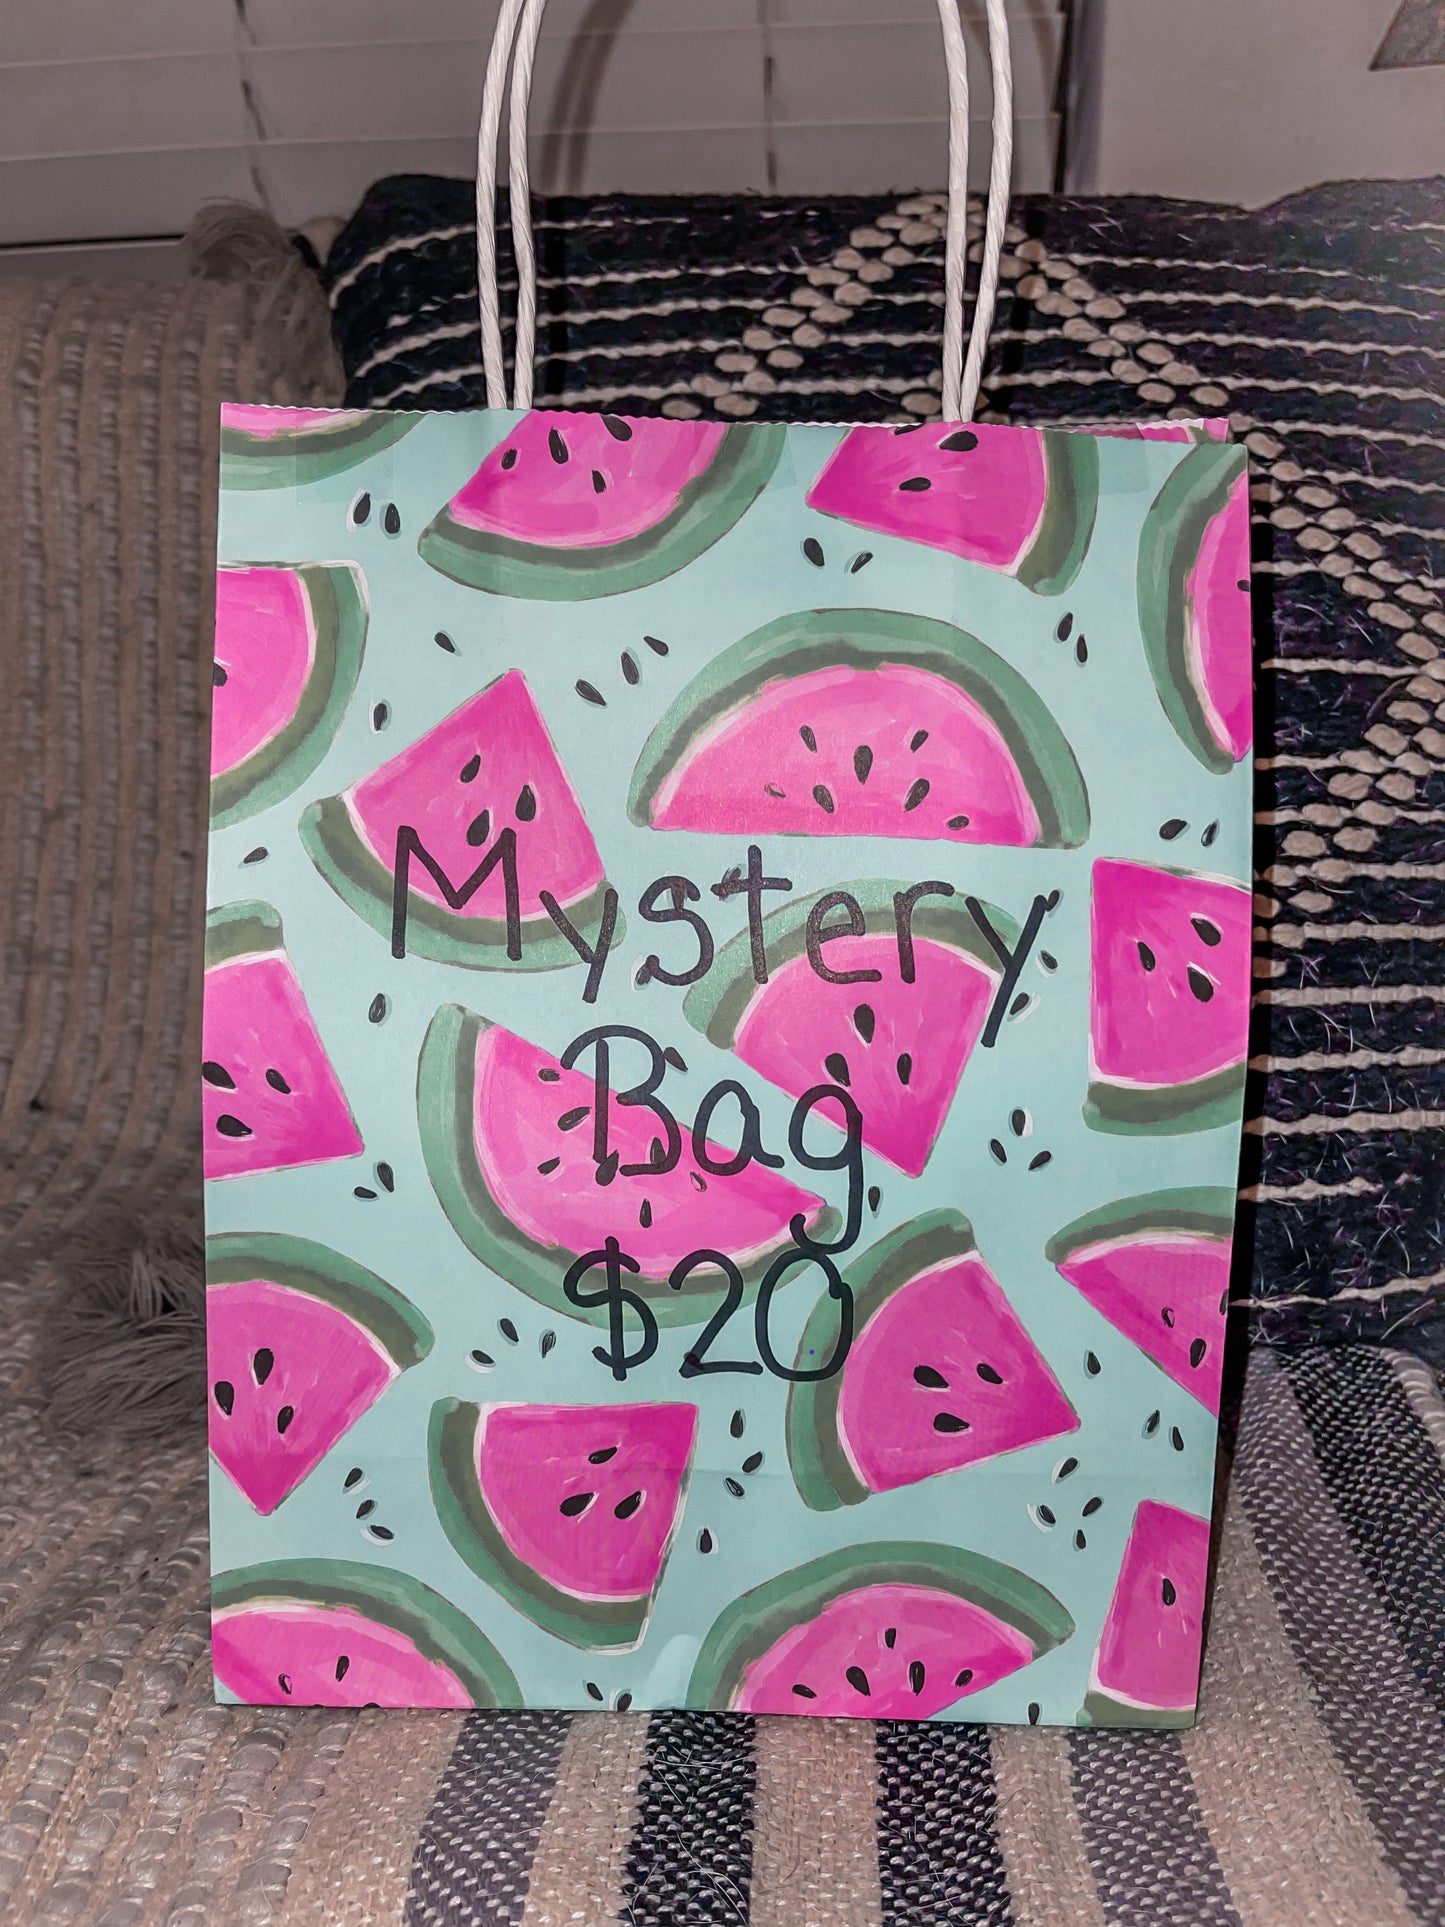 Mystery Bag $20